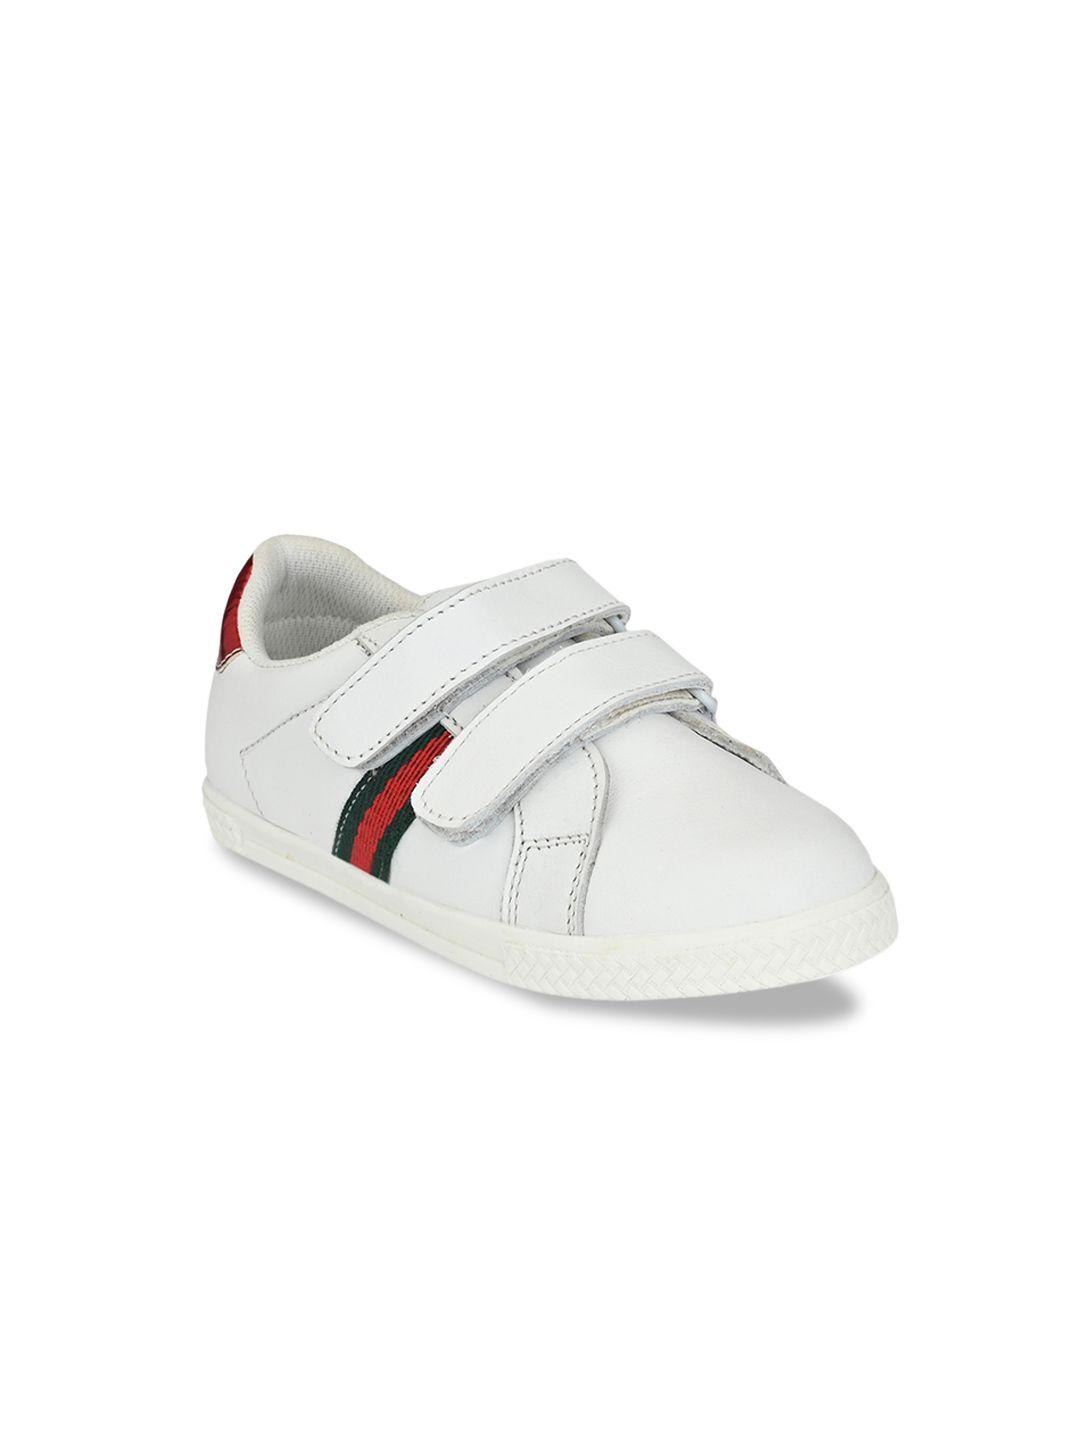 tuskey boys white leather slip-on sneakers